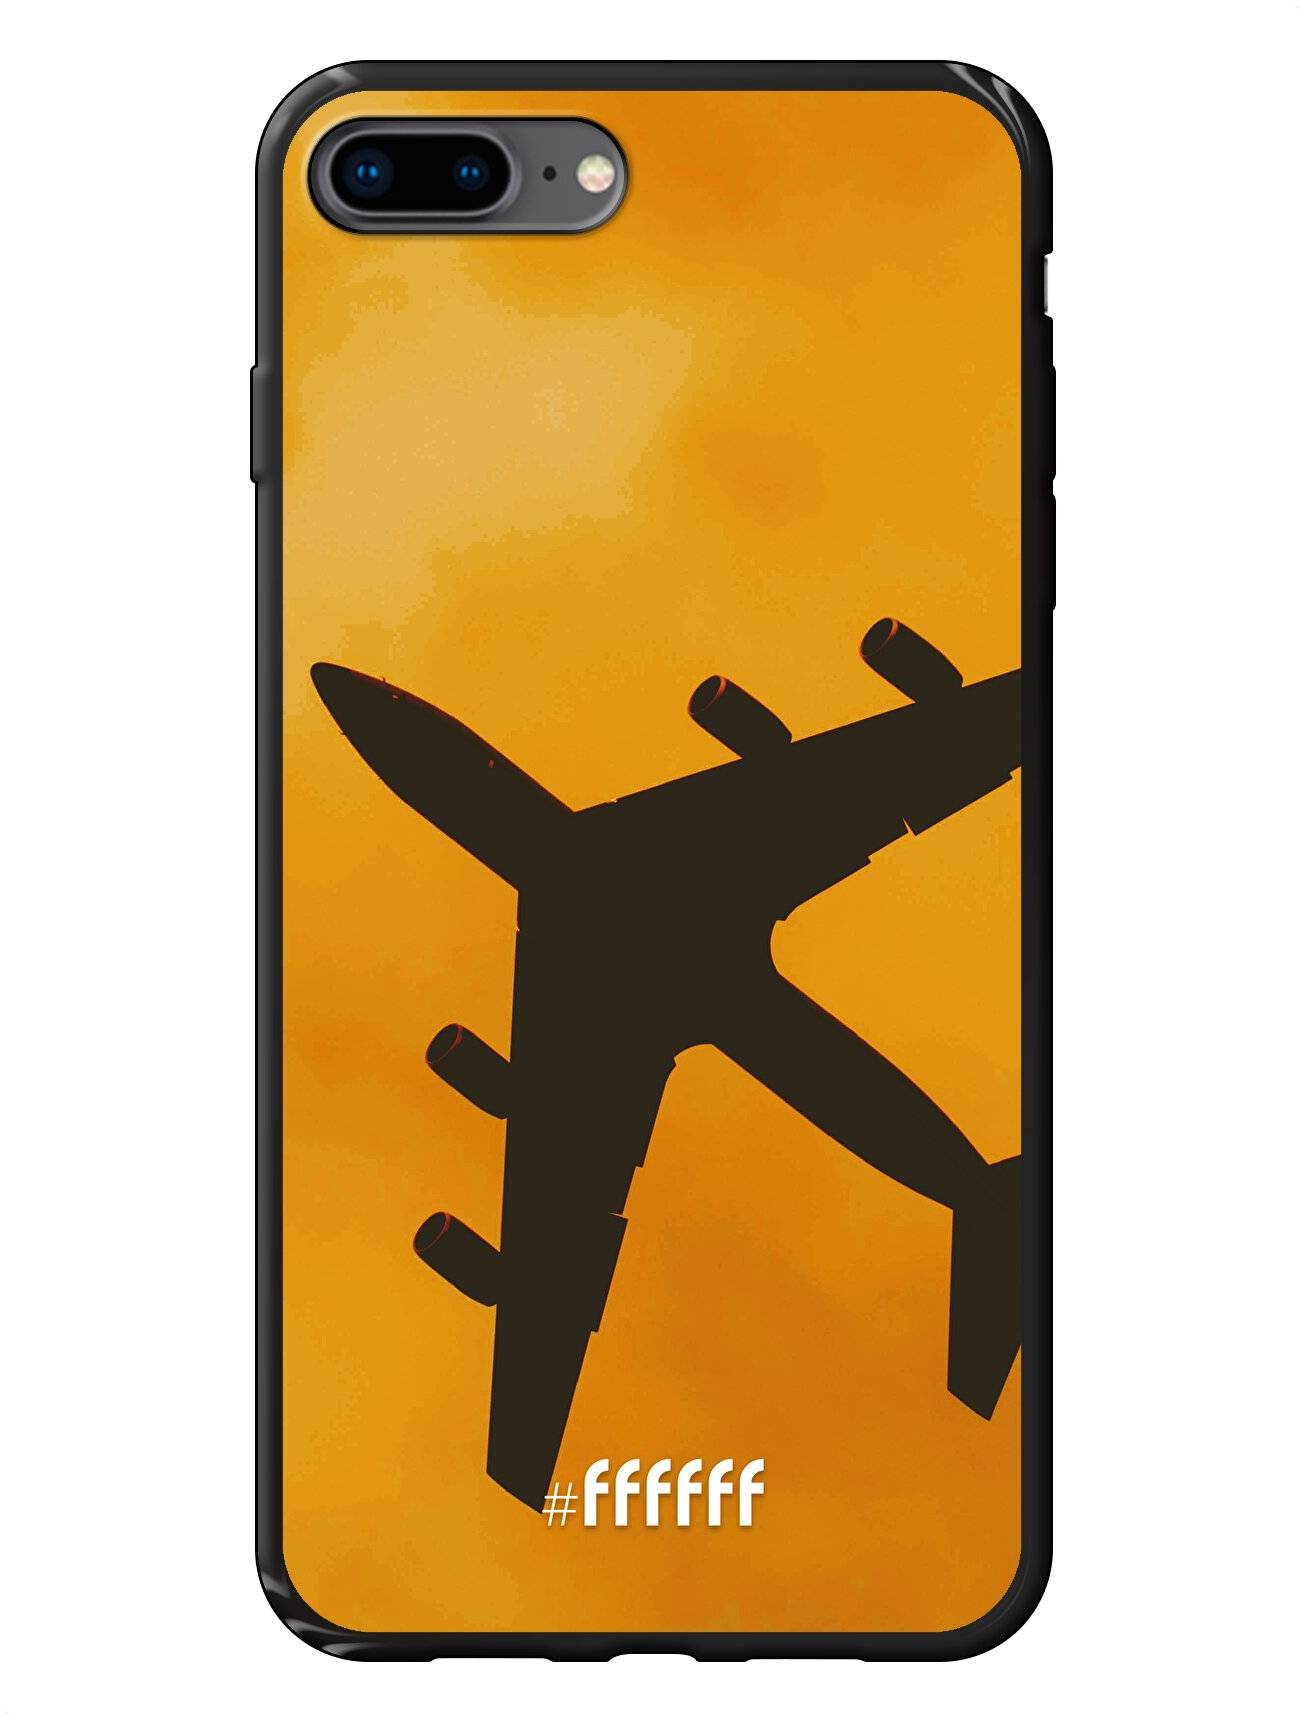 Aeroplane iPhone 7 Plus